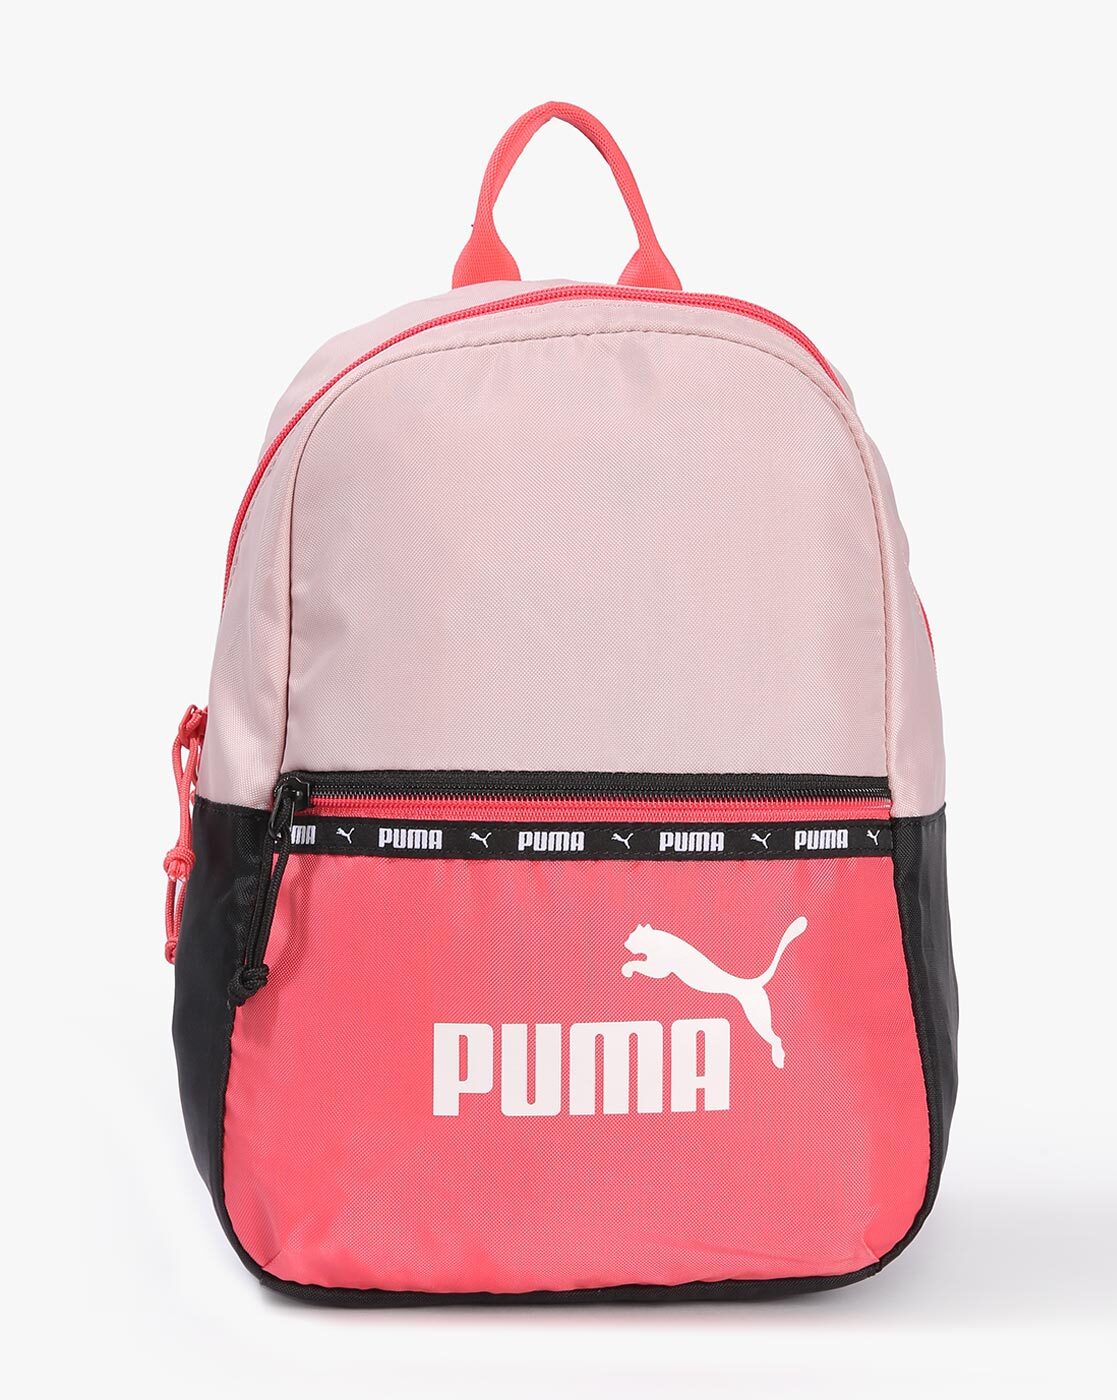 Buy Puma Accessories Online In India At Lowest Prices  Tata CLiQ